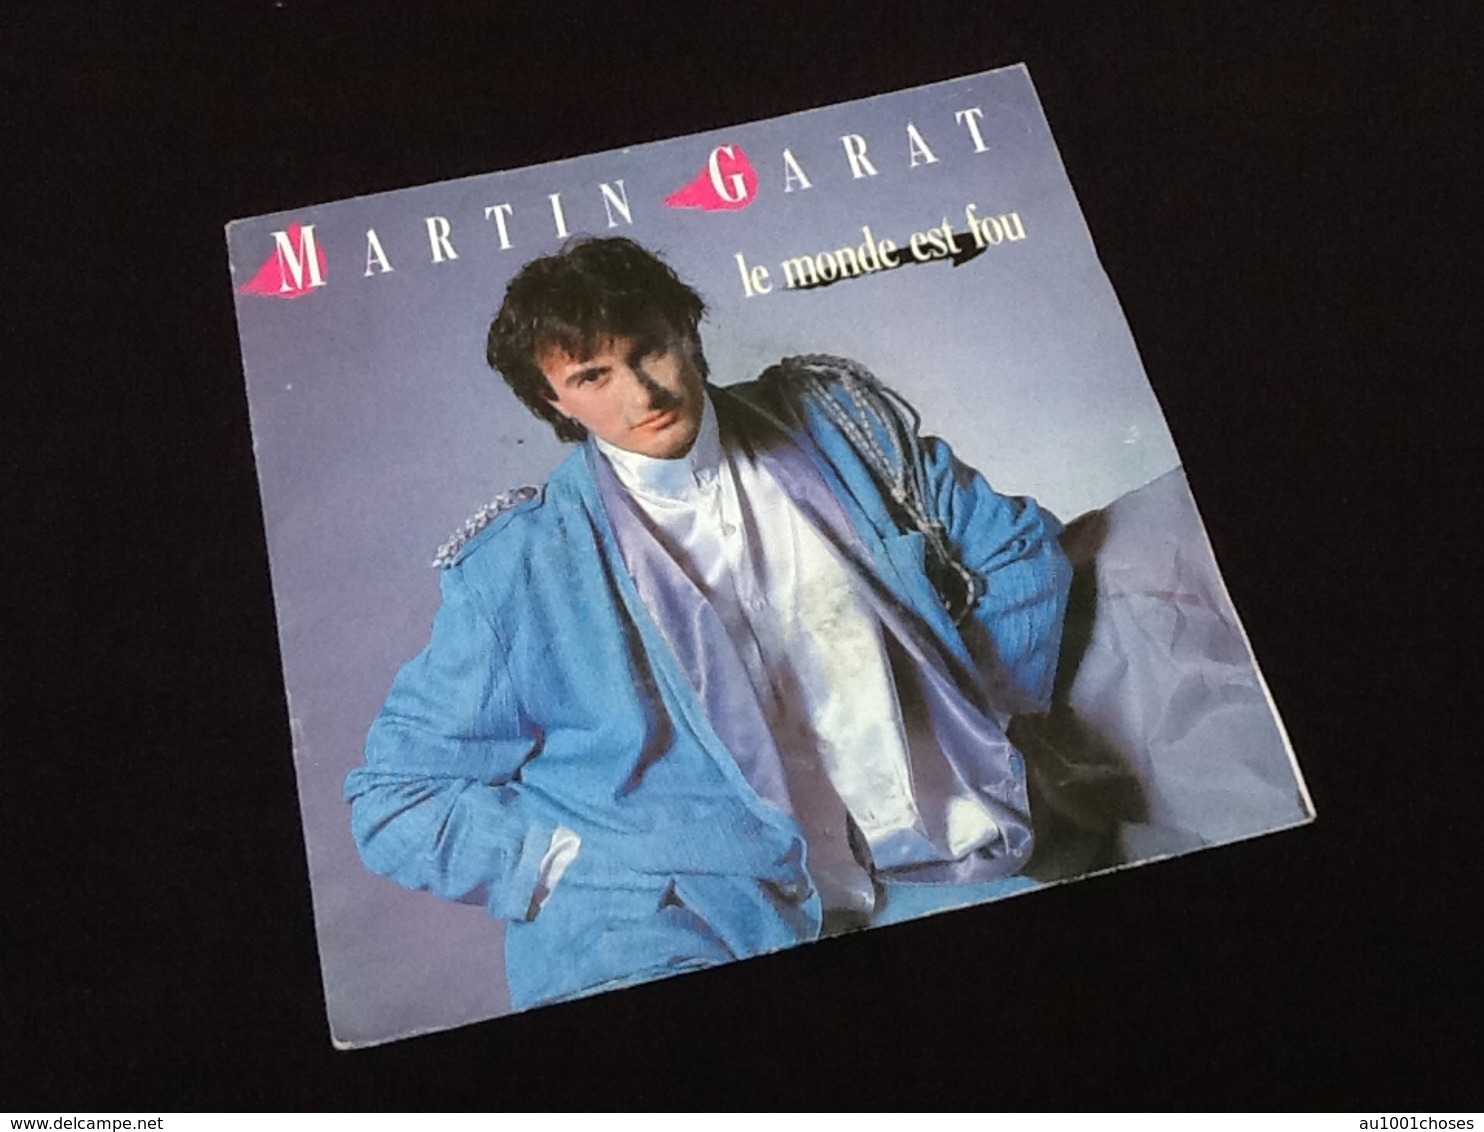 Vinyle 45 Tours Martin Garat Le Monde Est Fou (1985) - Filmmusik